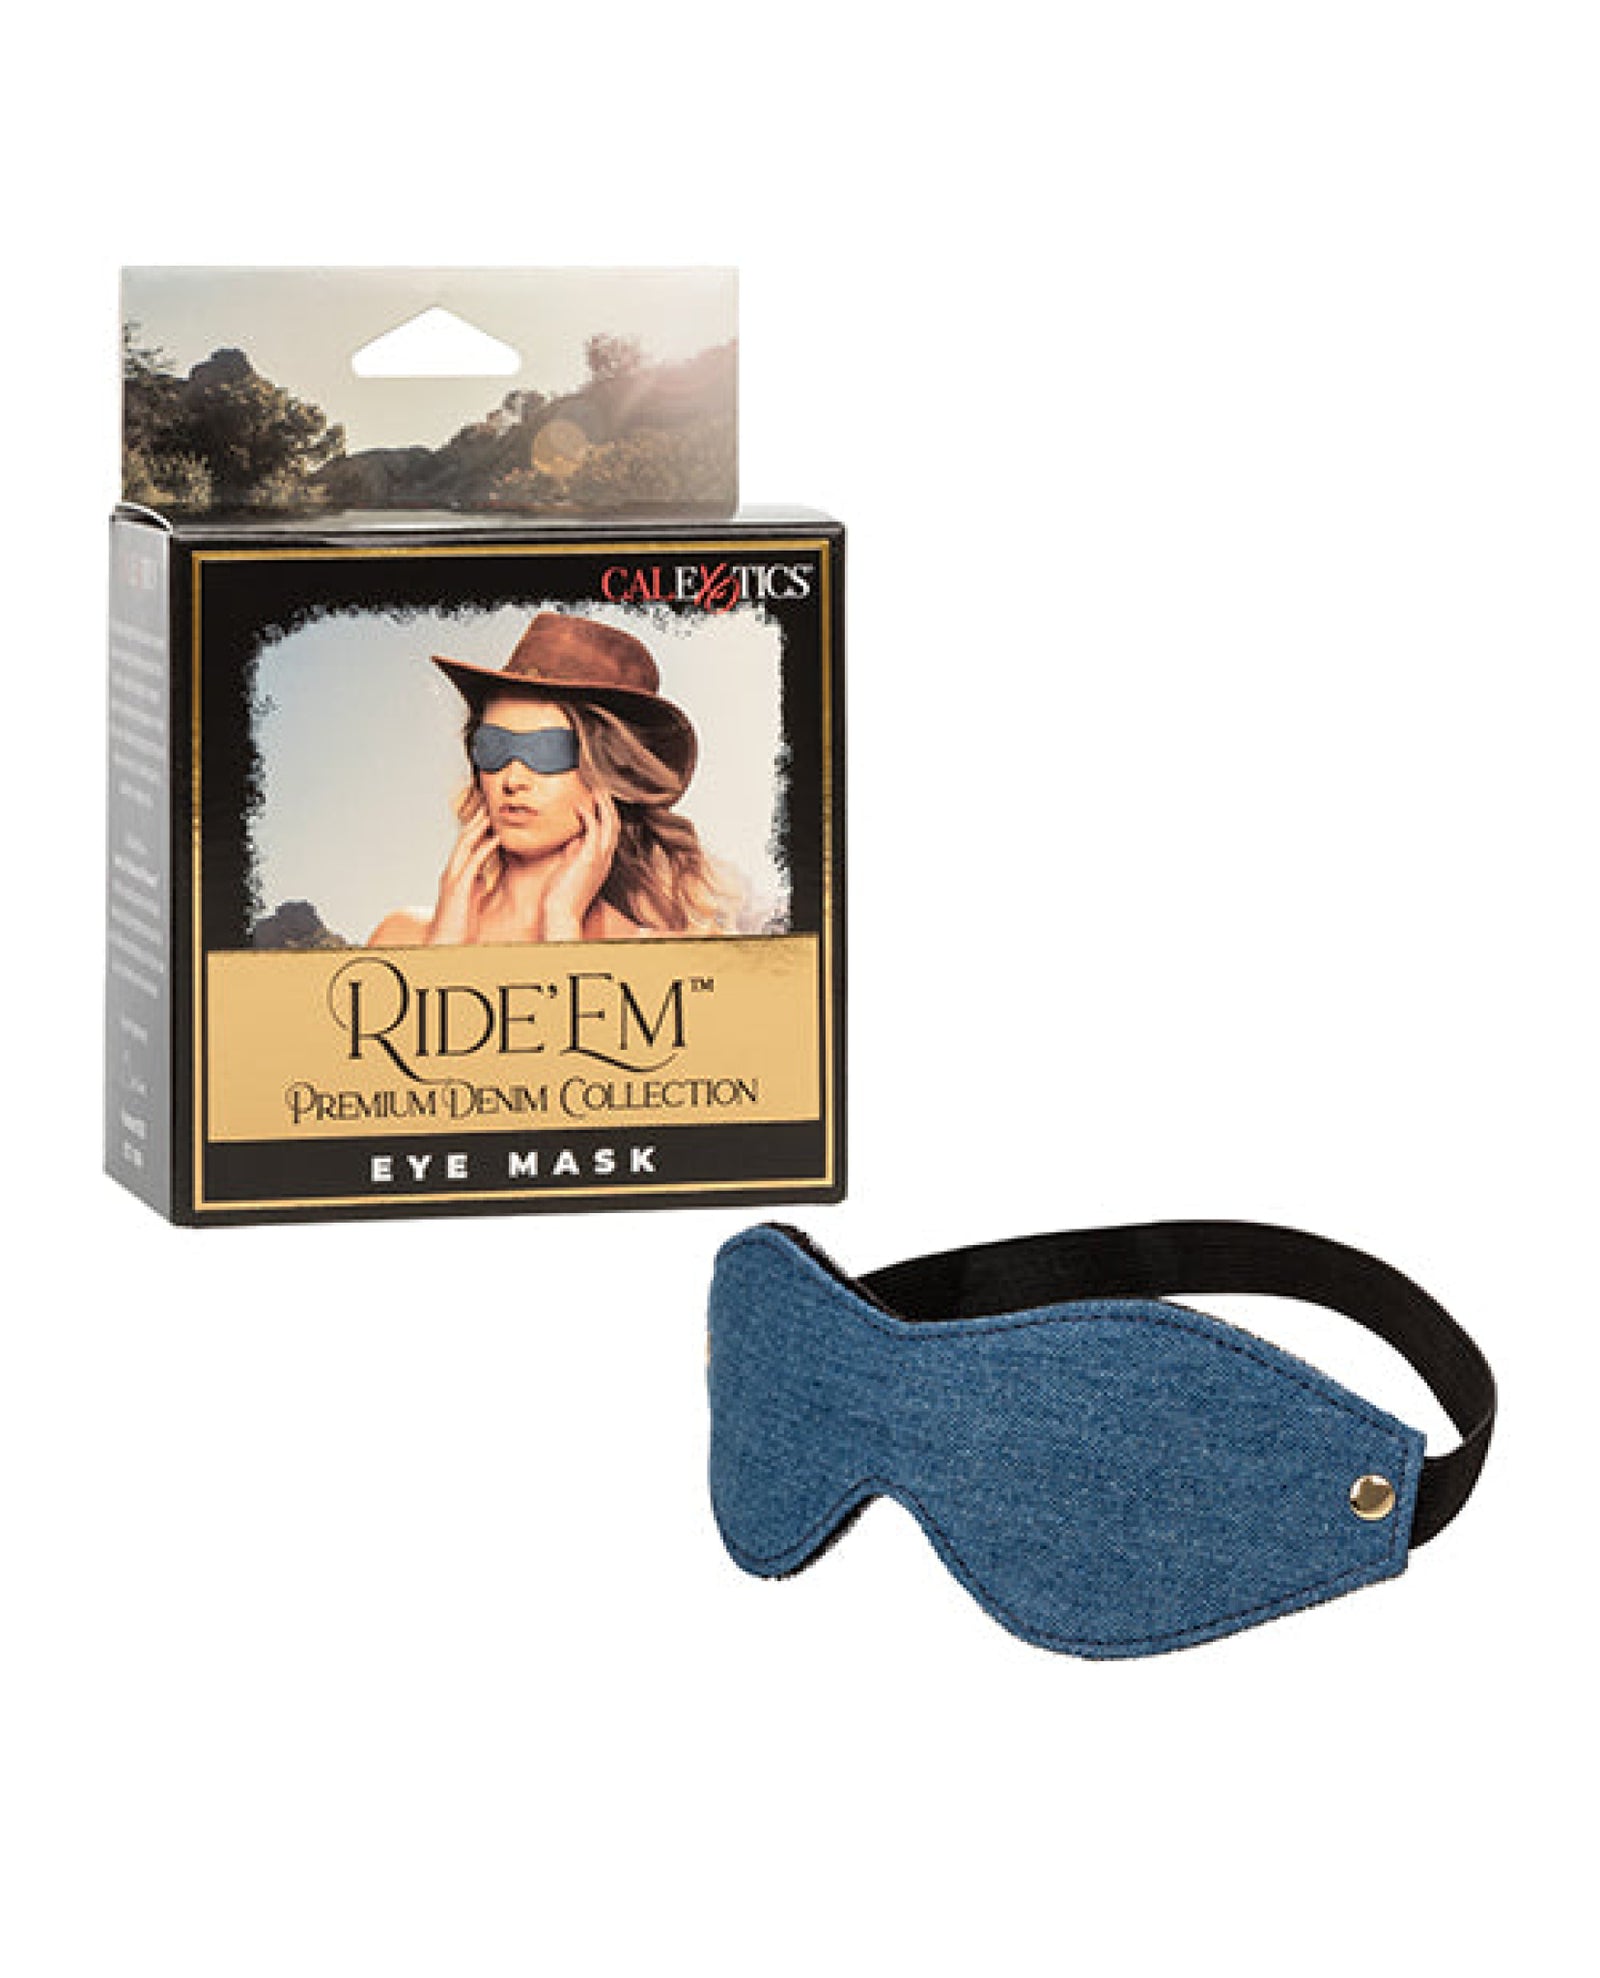 Ride 'em Premium Denim Collection Eye Mask California Exotic Novelties